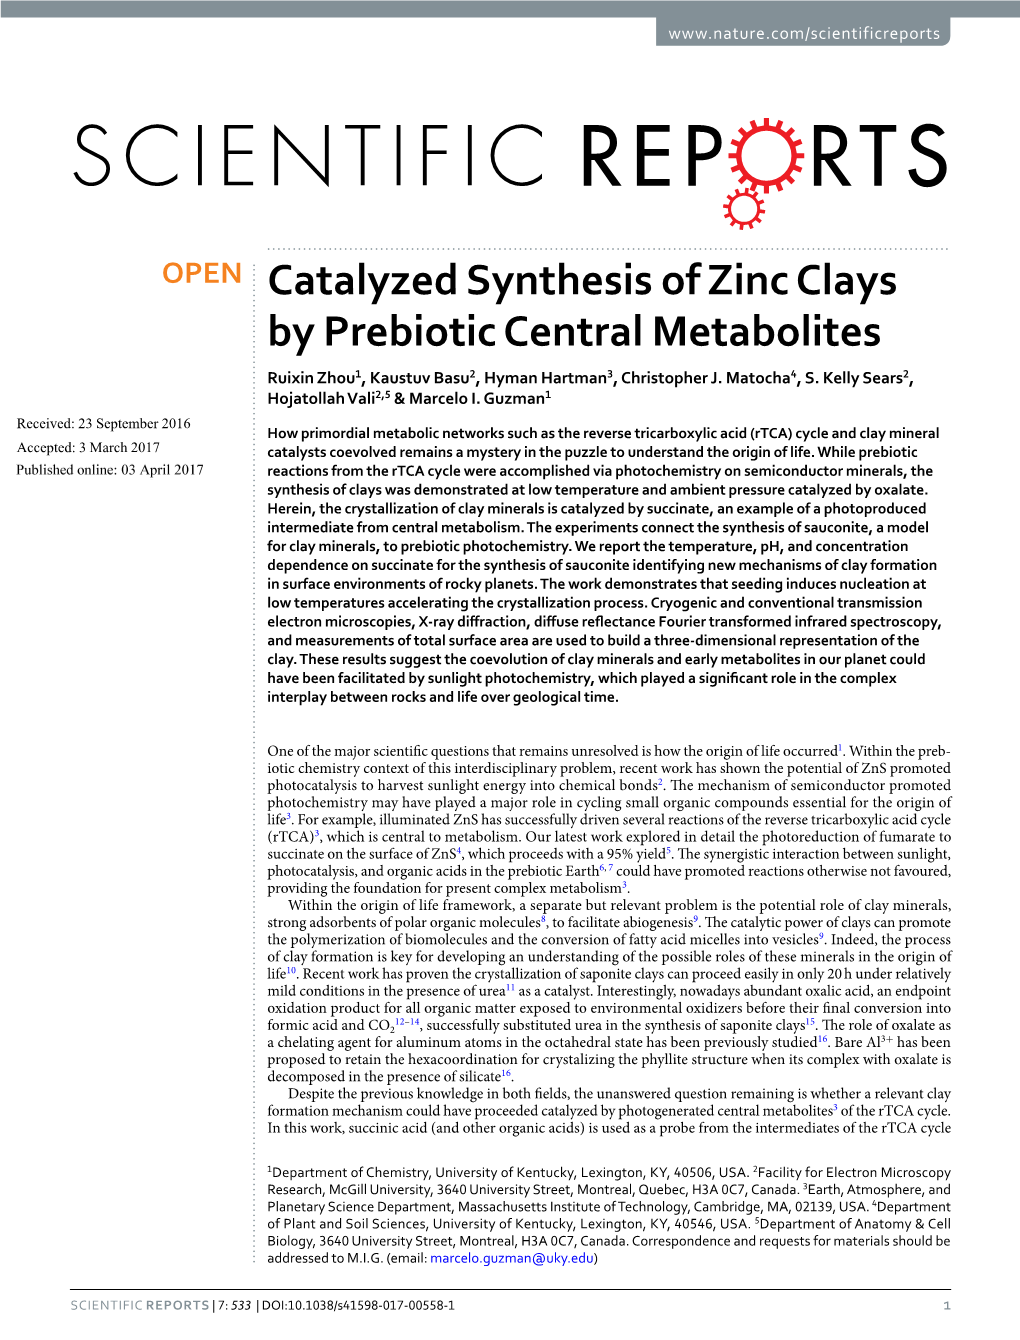 Catalyzed Synthesis of Zinc Clays by Prebiotic Central Metabolites Ruixin Zhou1, Kaustuv Basu2, Hyman Hartman3, Christopher J